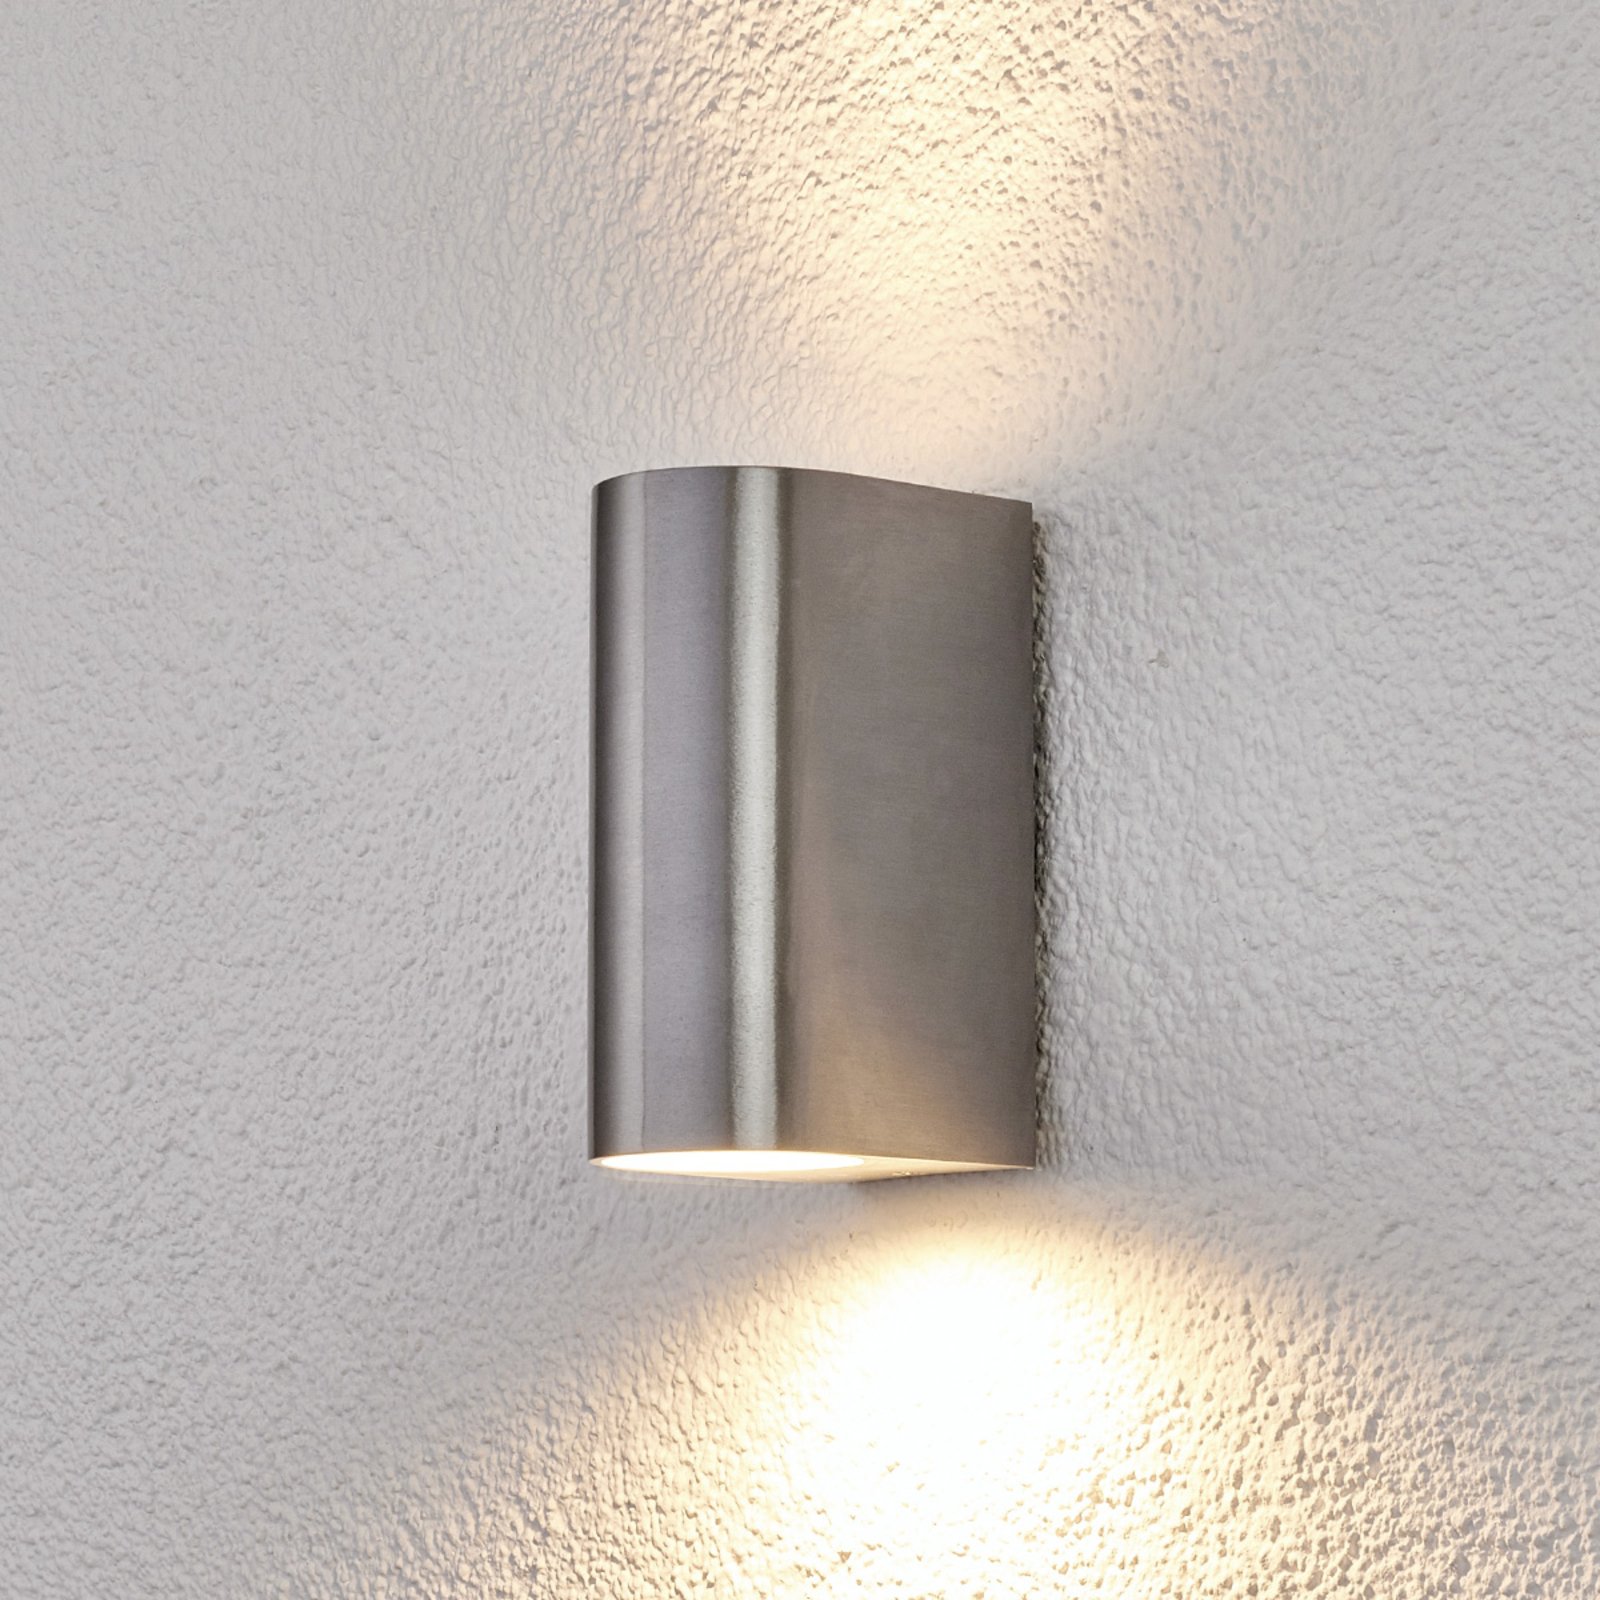 2-flammige Aluminium-Außenwandlampe Idris